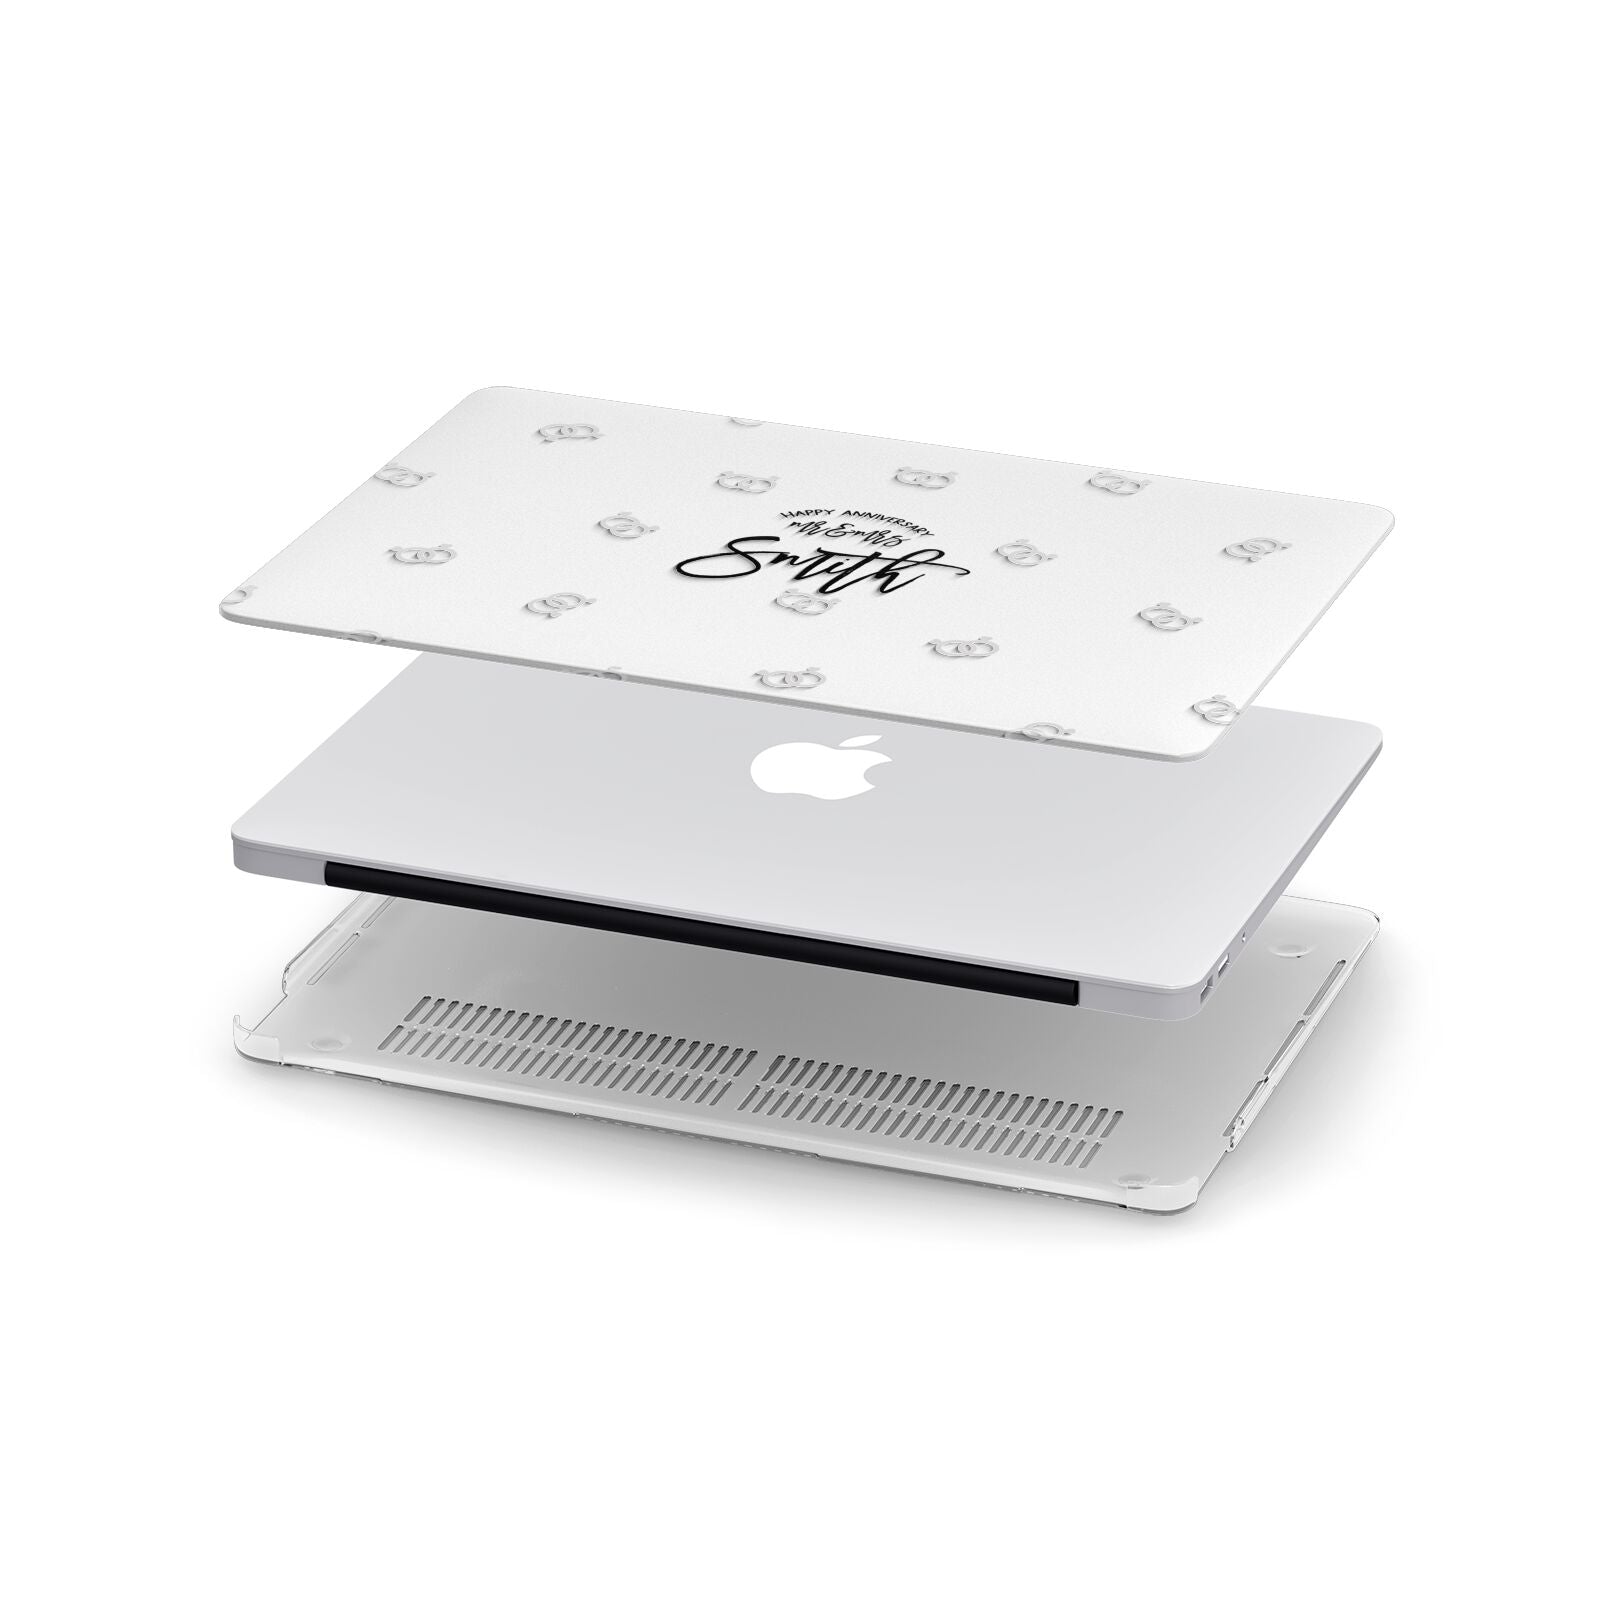 Personalised Anniversary Monochrome Apple MacBook Case in Detail